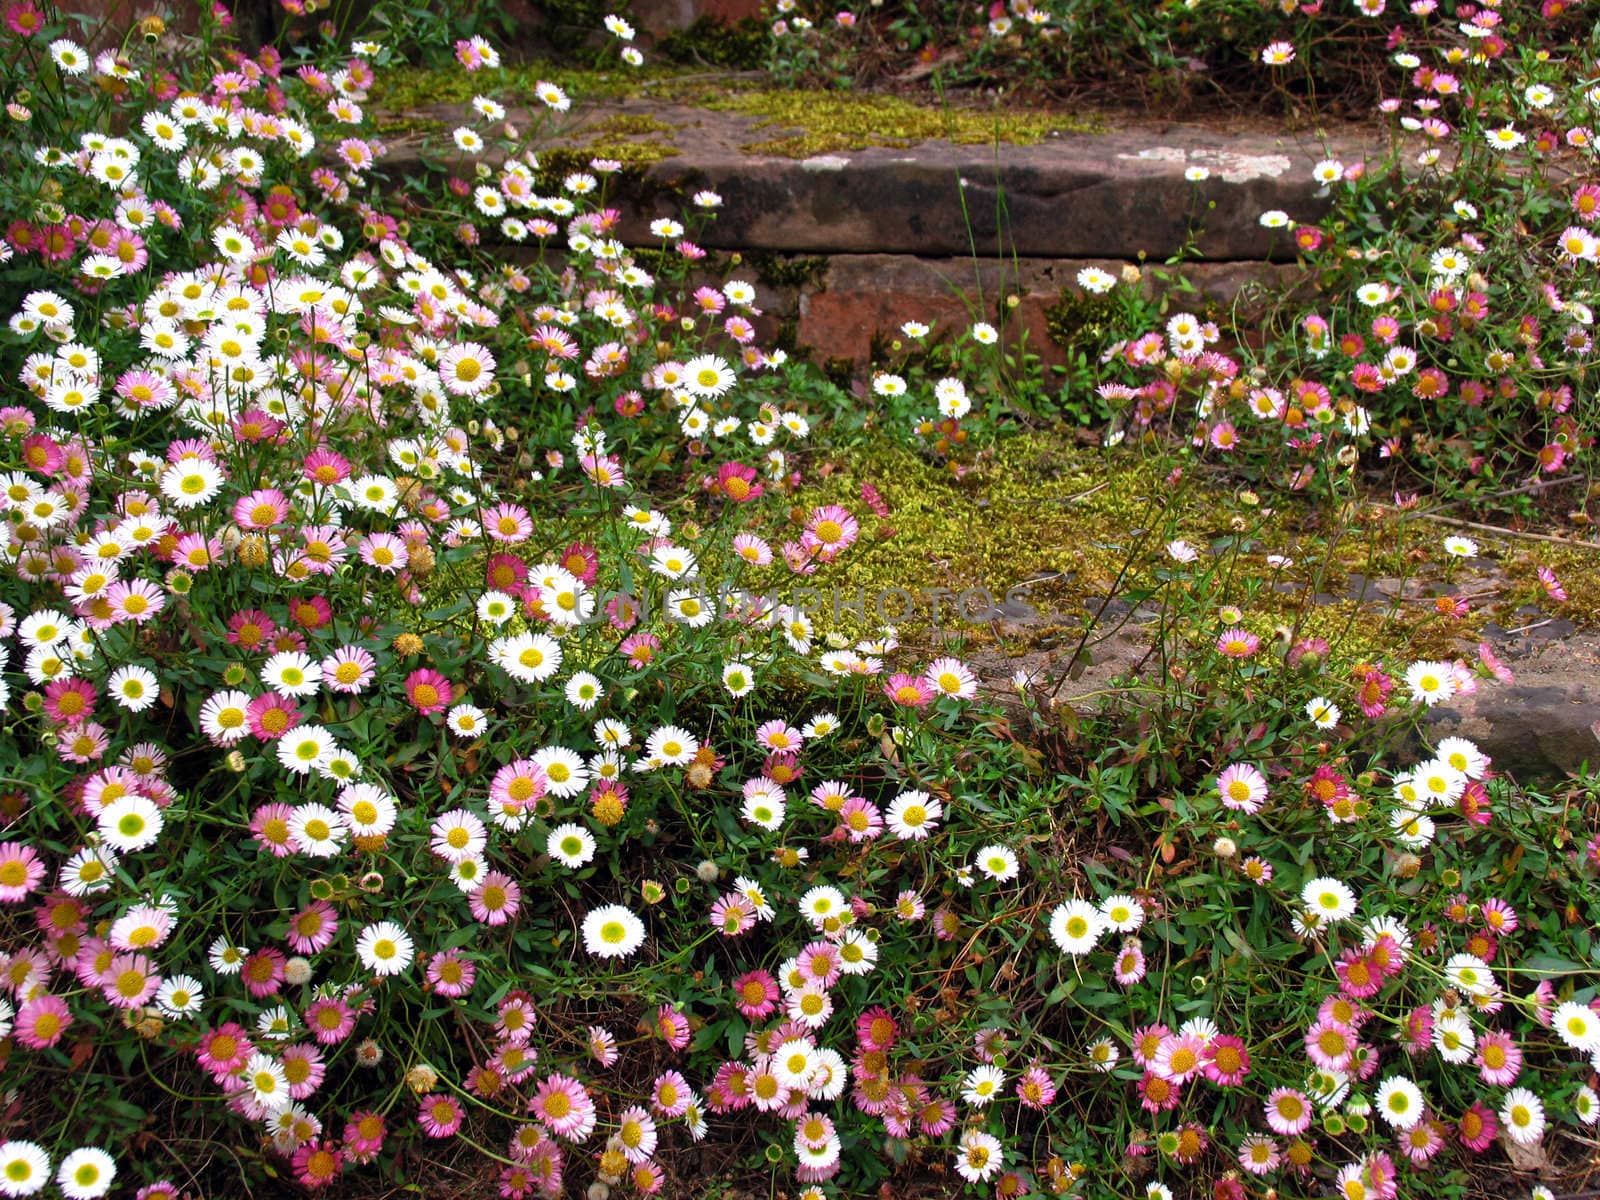 Daisy garden by runamock